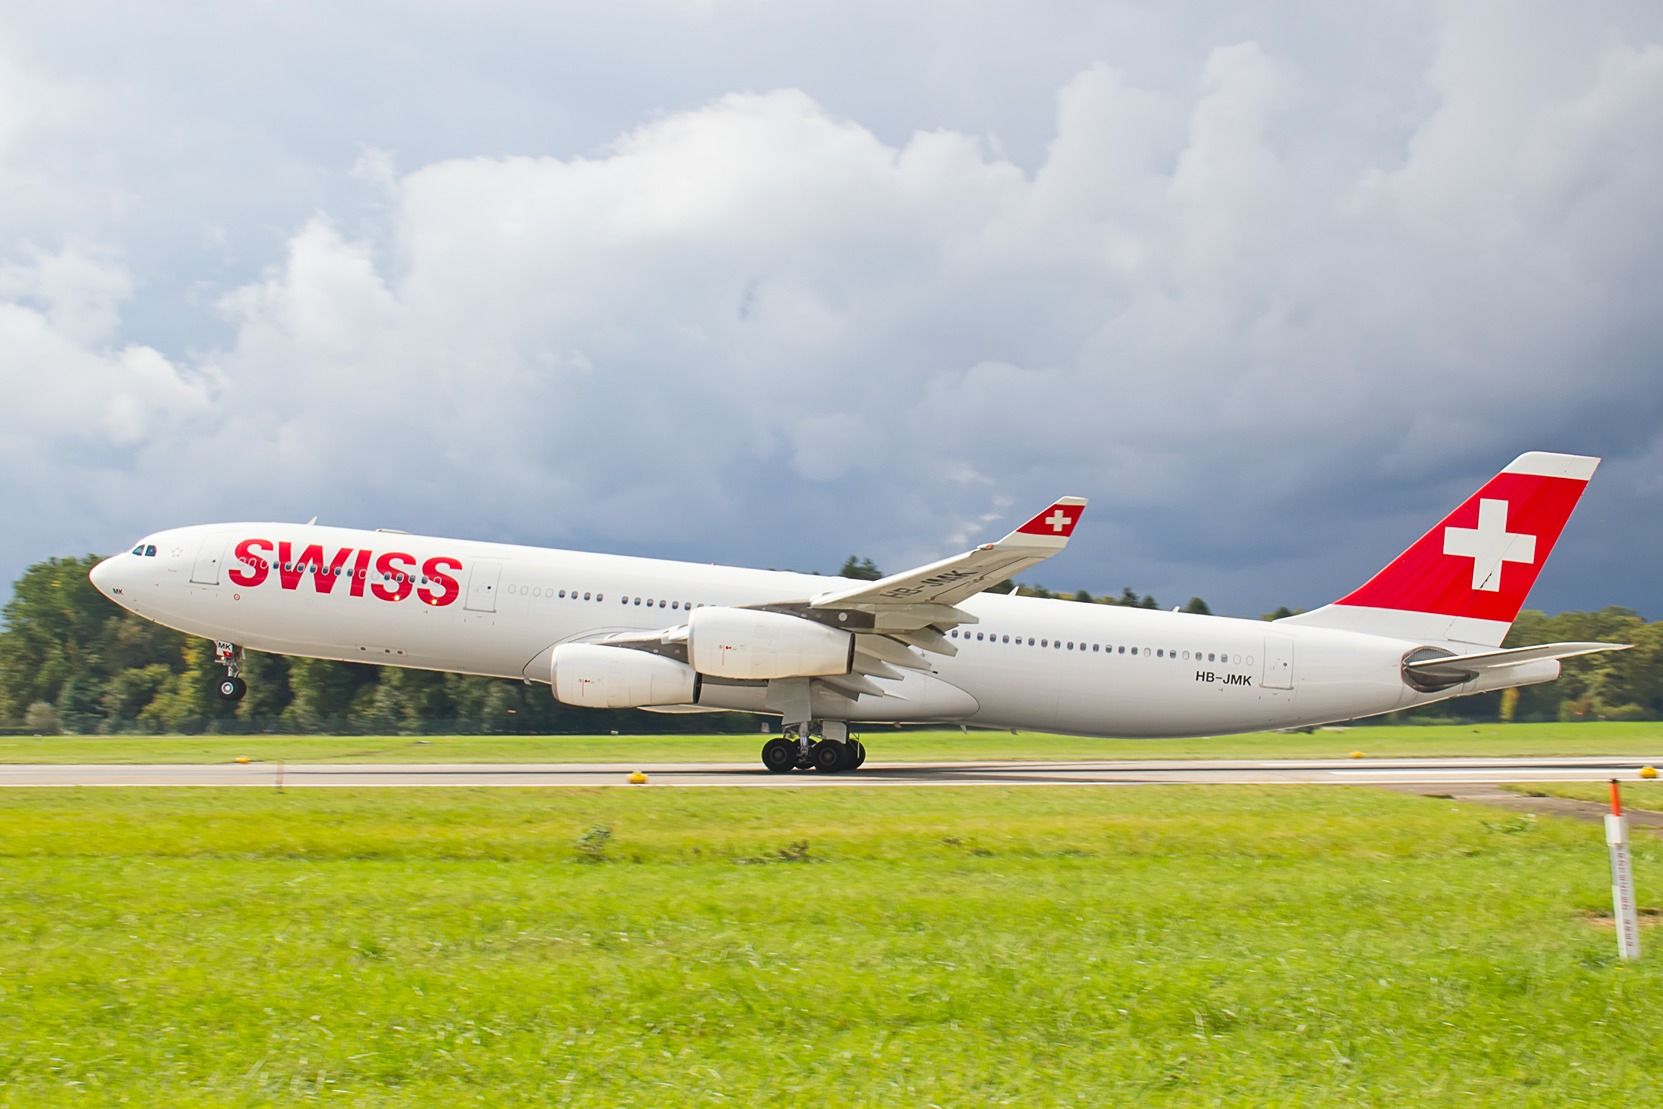 SWISS Airbus A340-300 departing shutterstock_218604841